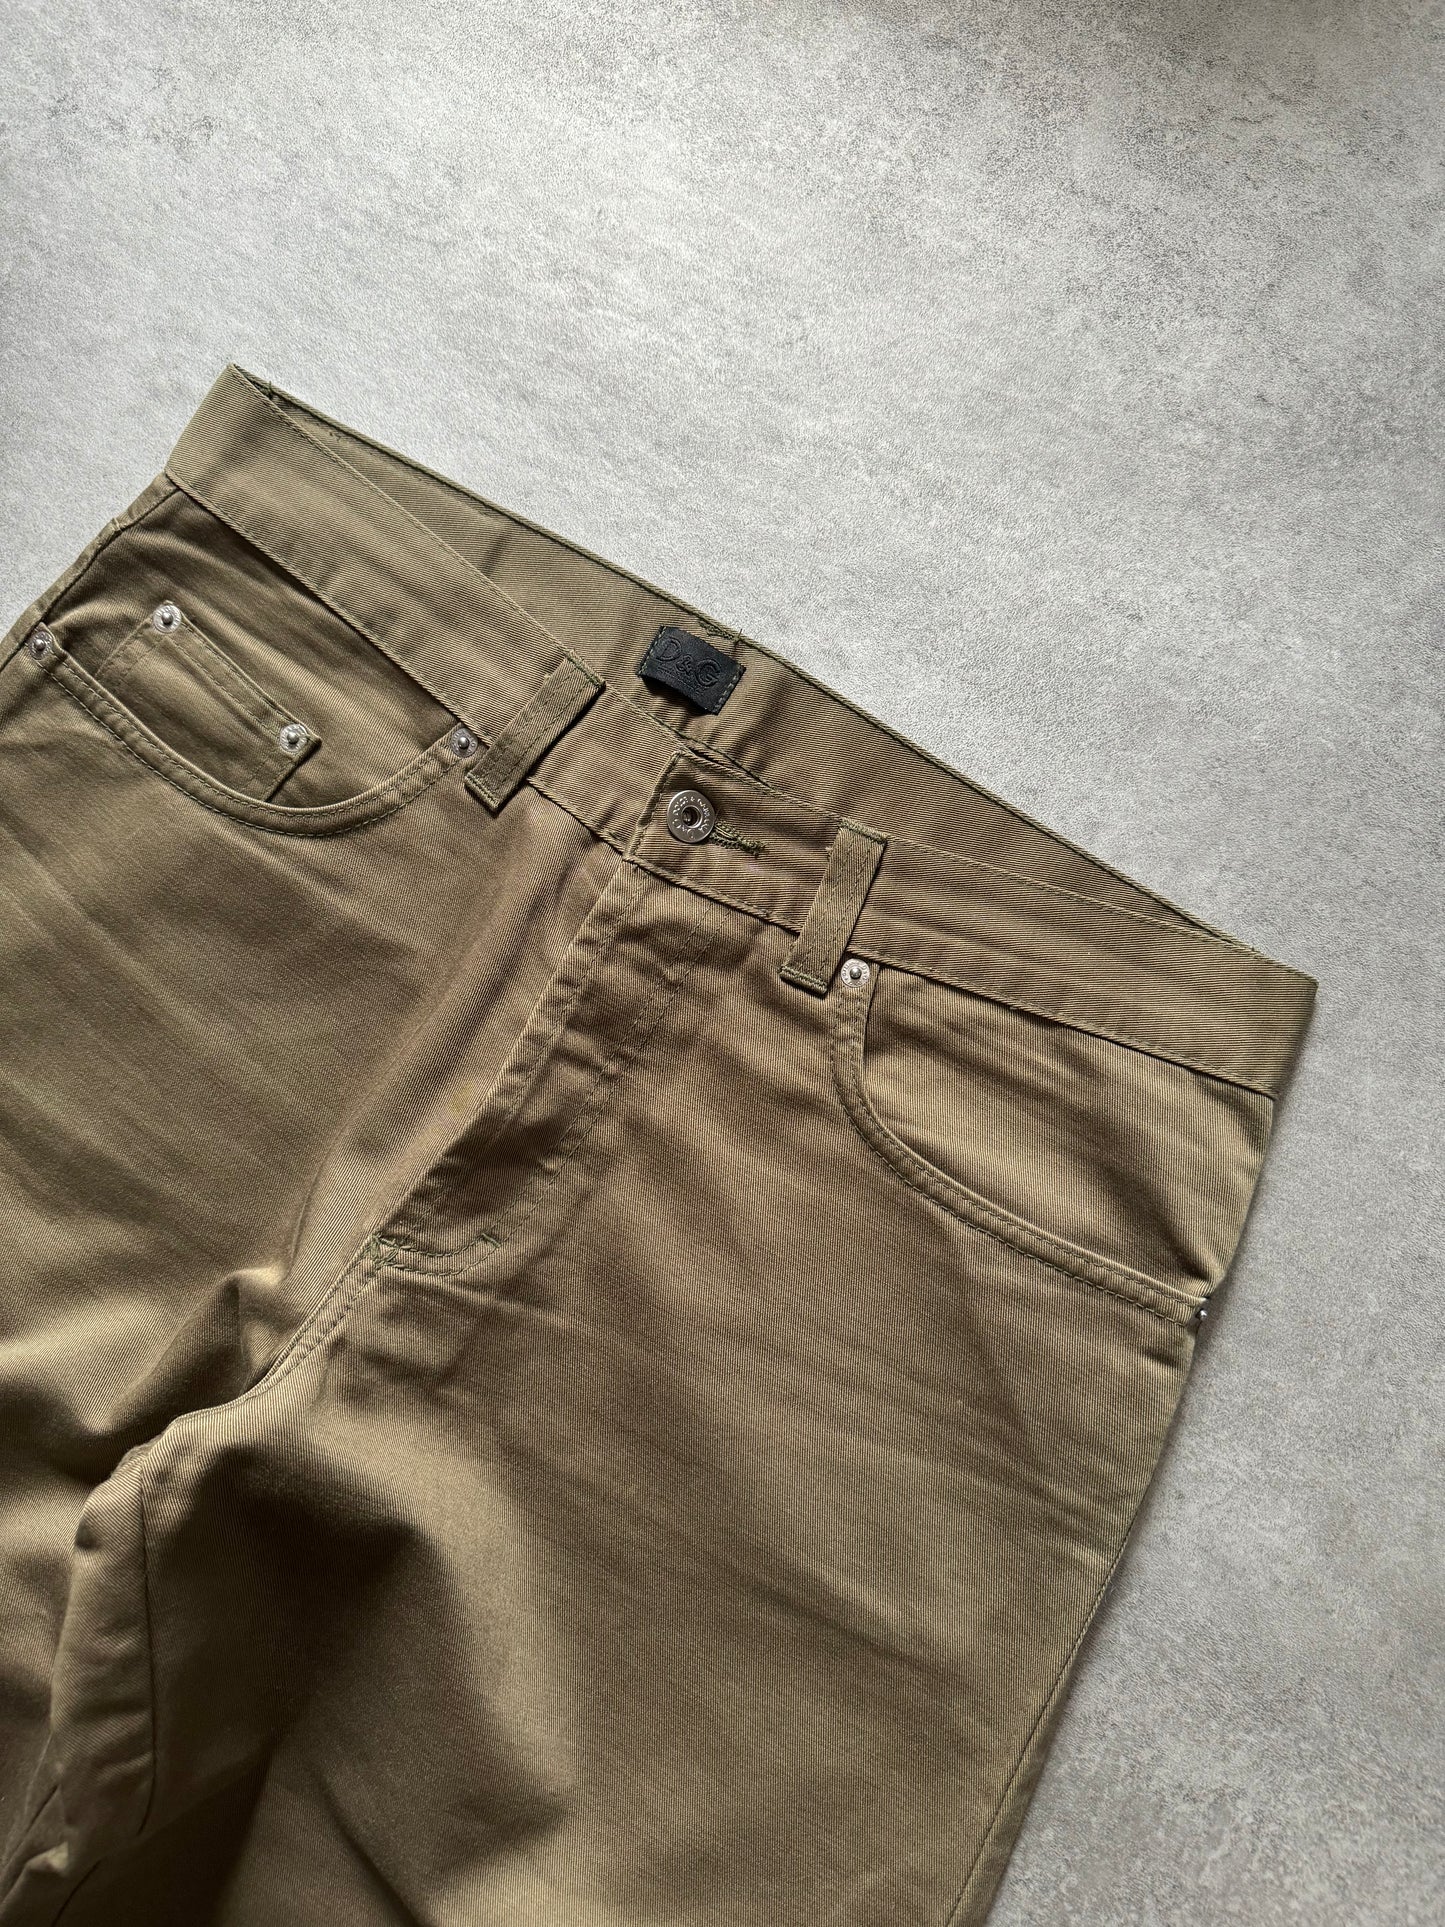 Dolce & Gabbana Olive Cargo Detachable Pants (M) - 7